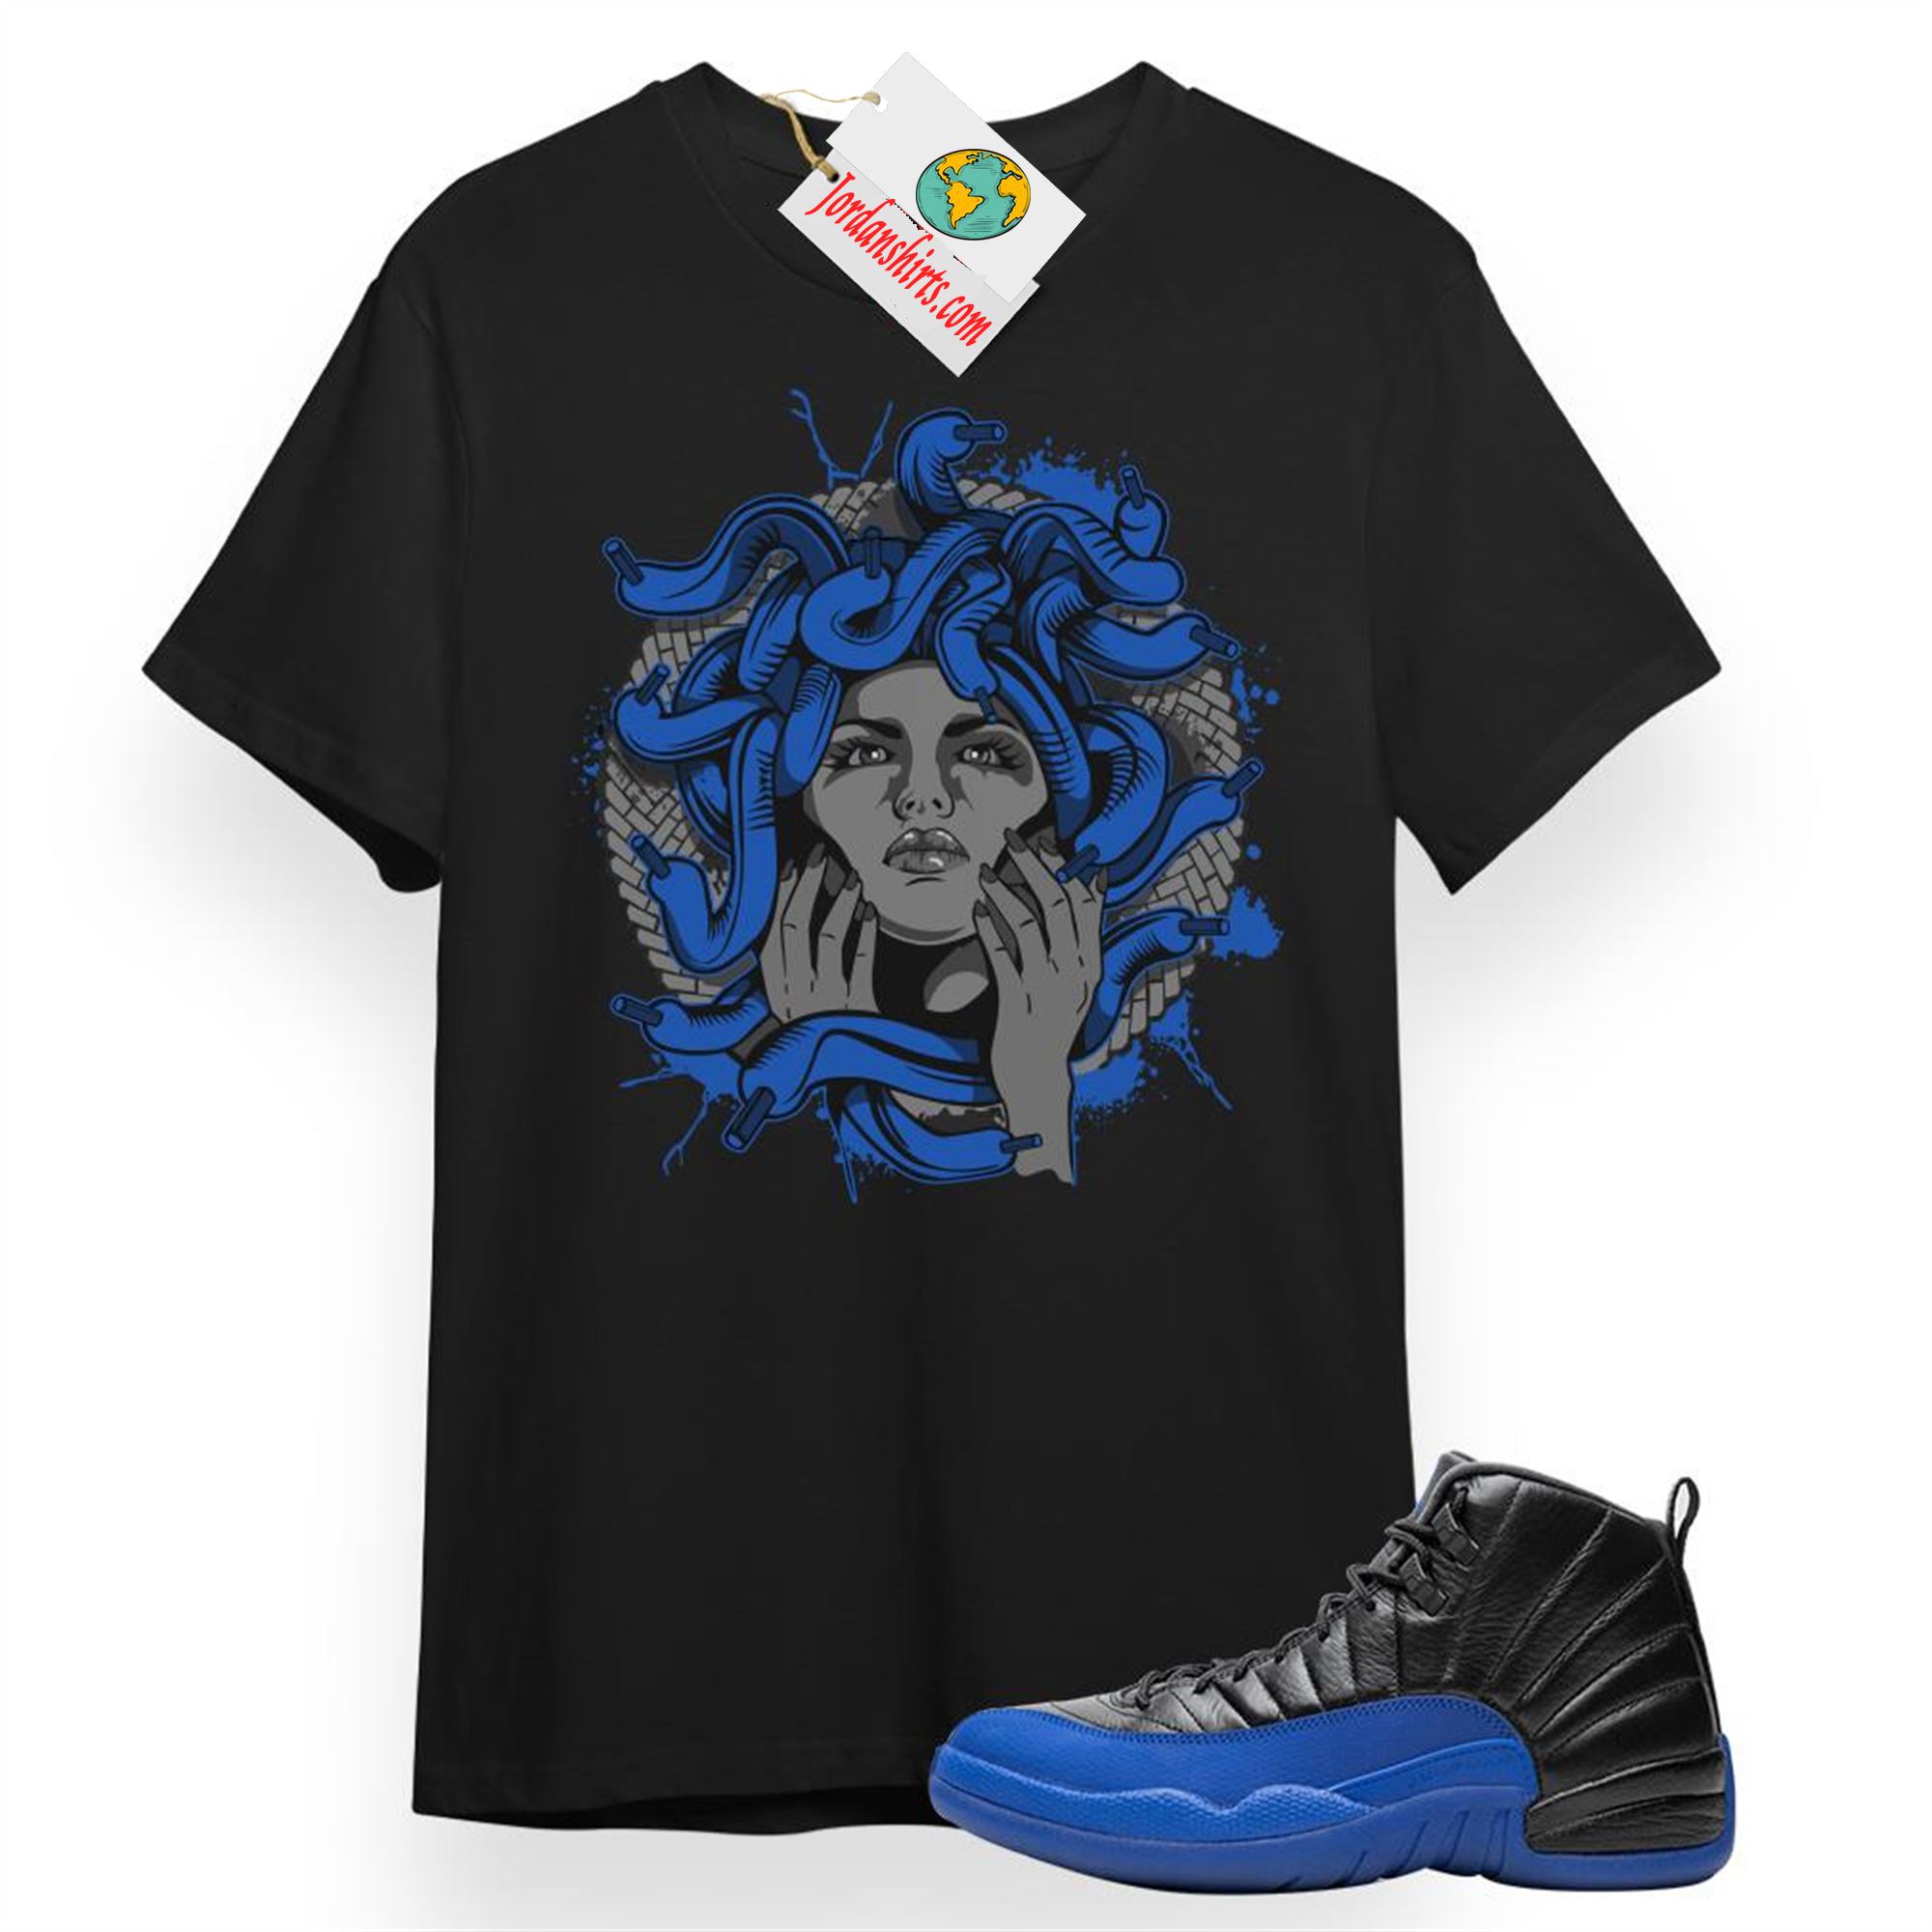 Jordan 12 Shirt, Medusa Black T-shirt Air Jordan 12 Game Royal 12s Size Up To 5xl